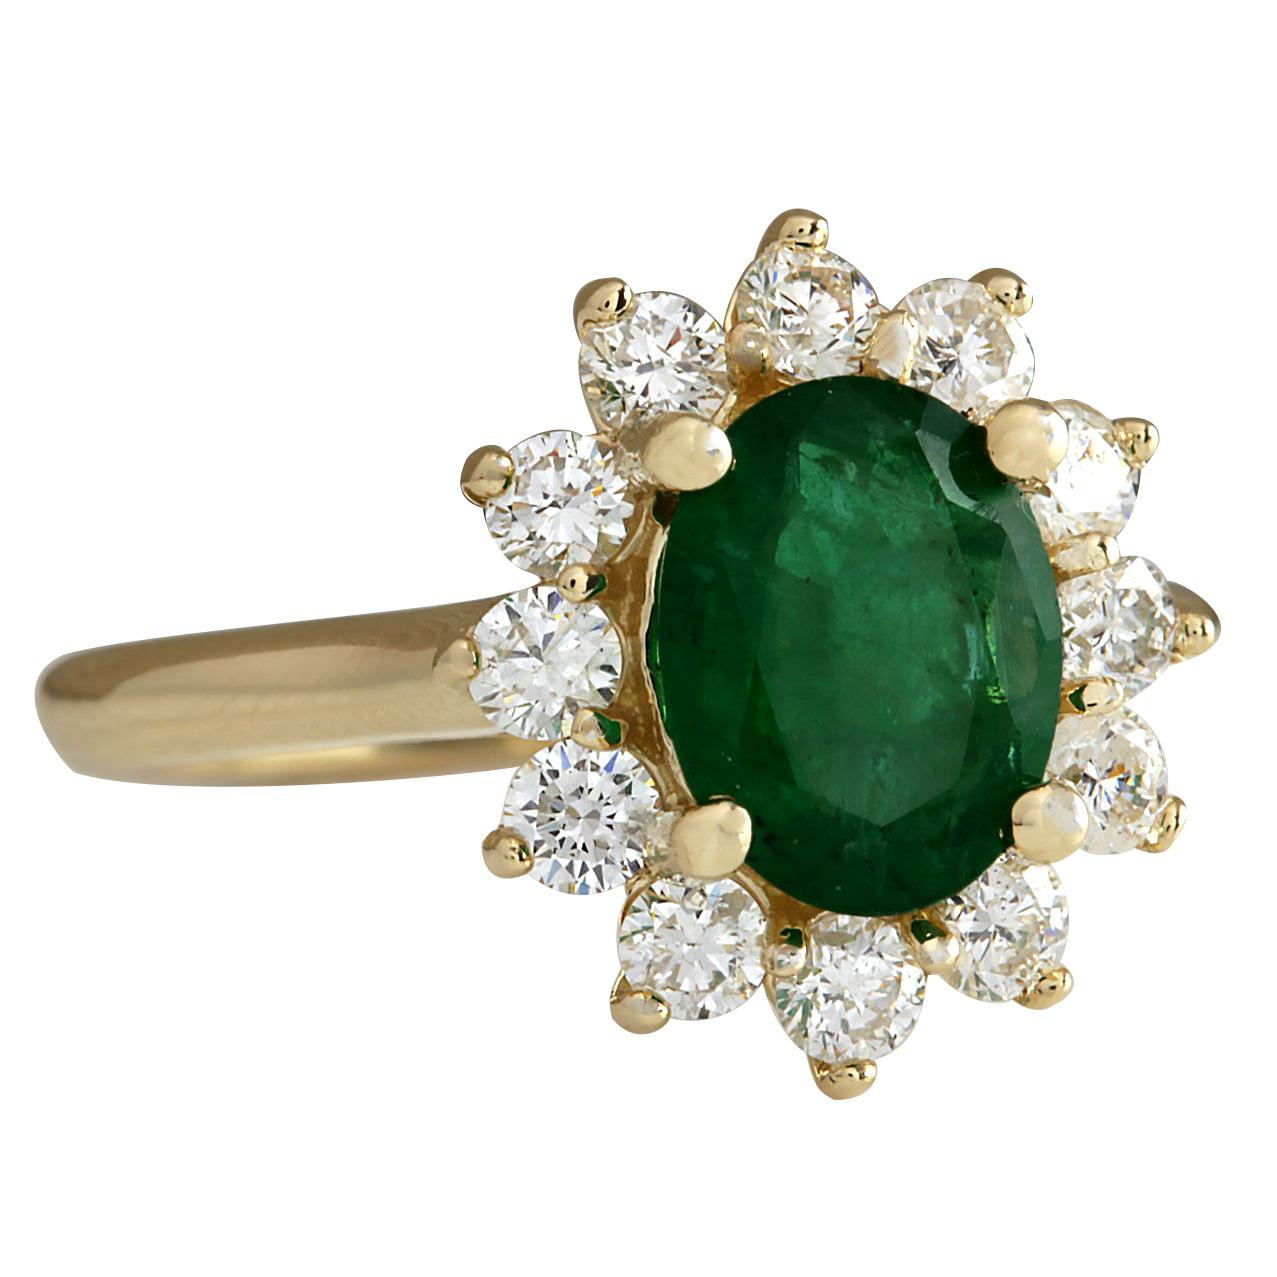 2.35 Carat Natural Emerald 14 Karat Yellow Gold Diamond Ring
Stamped: 14K Yellow Gold
Total Ring Weight: 5.0 Grams
Total Natural Emerald Weight is 1.50 Carat (Measures: 9.00x7.00 mm)
Color: Green
Total Natural Diamond Weight is 0.85 Carat
Color: